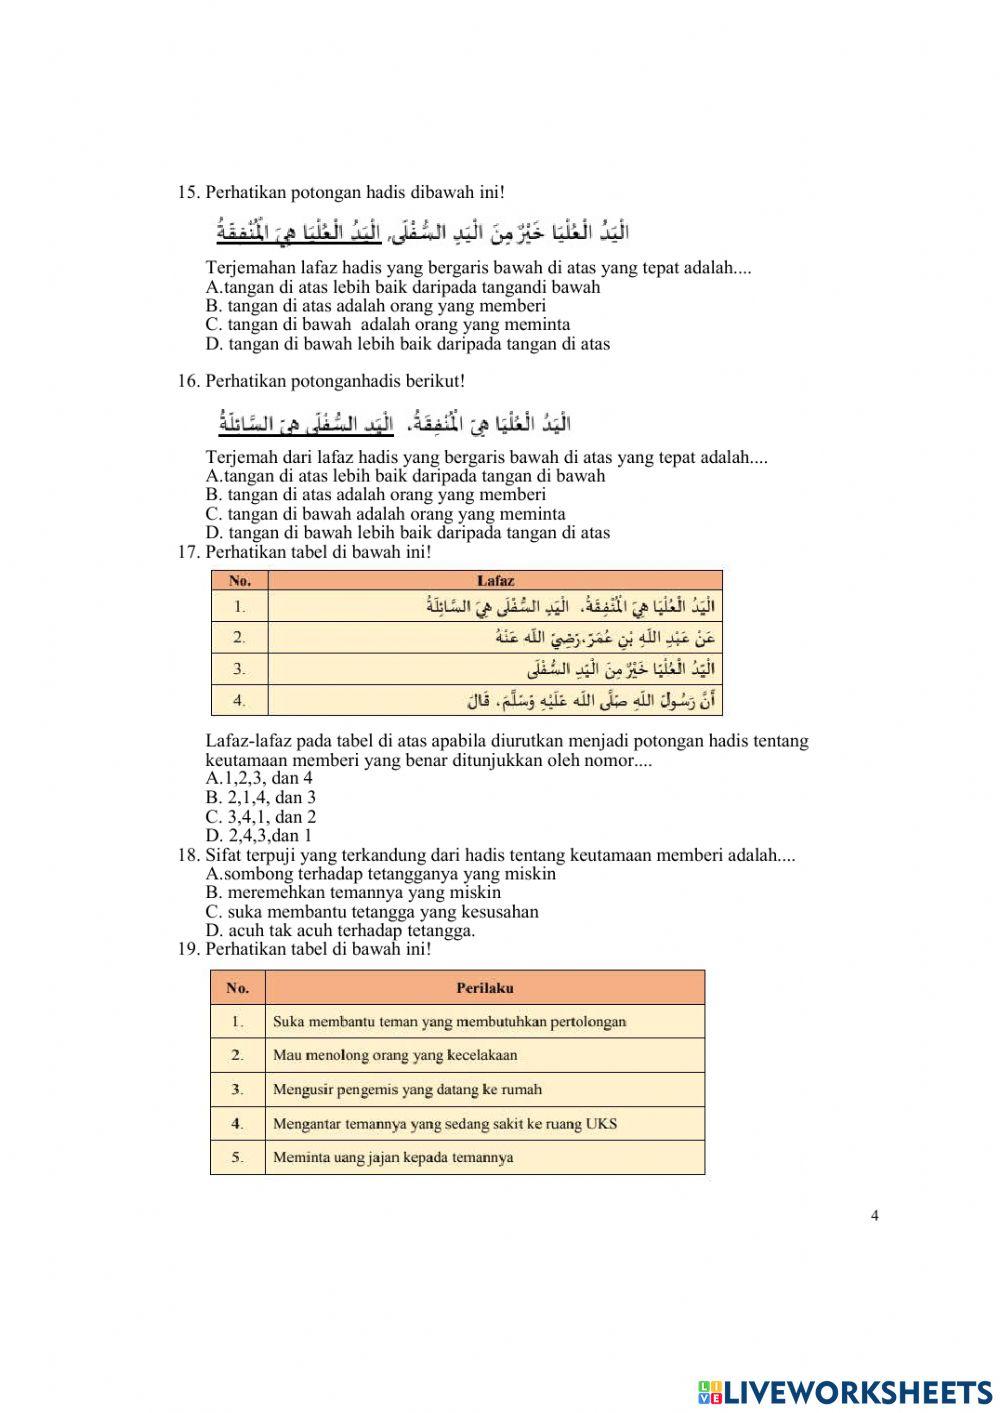 PAT Quran Hadist Kelas 6